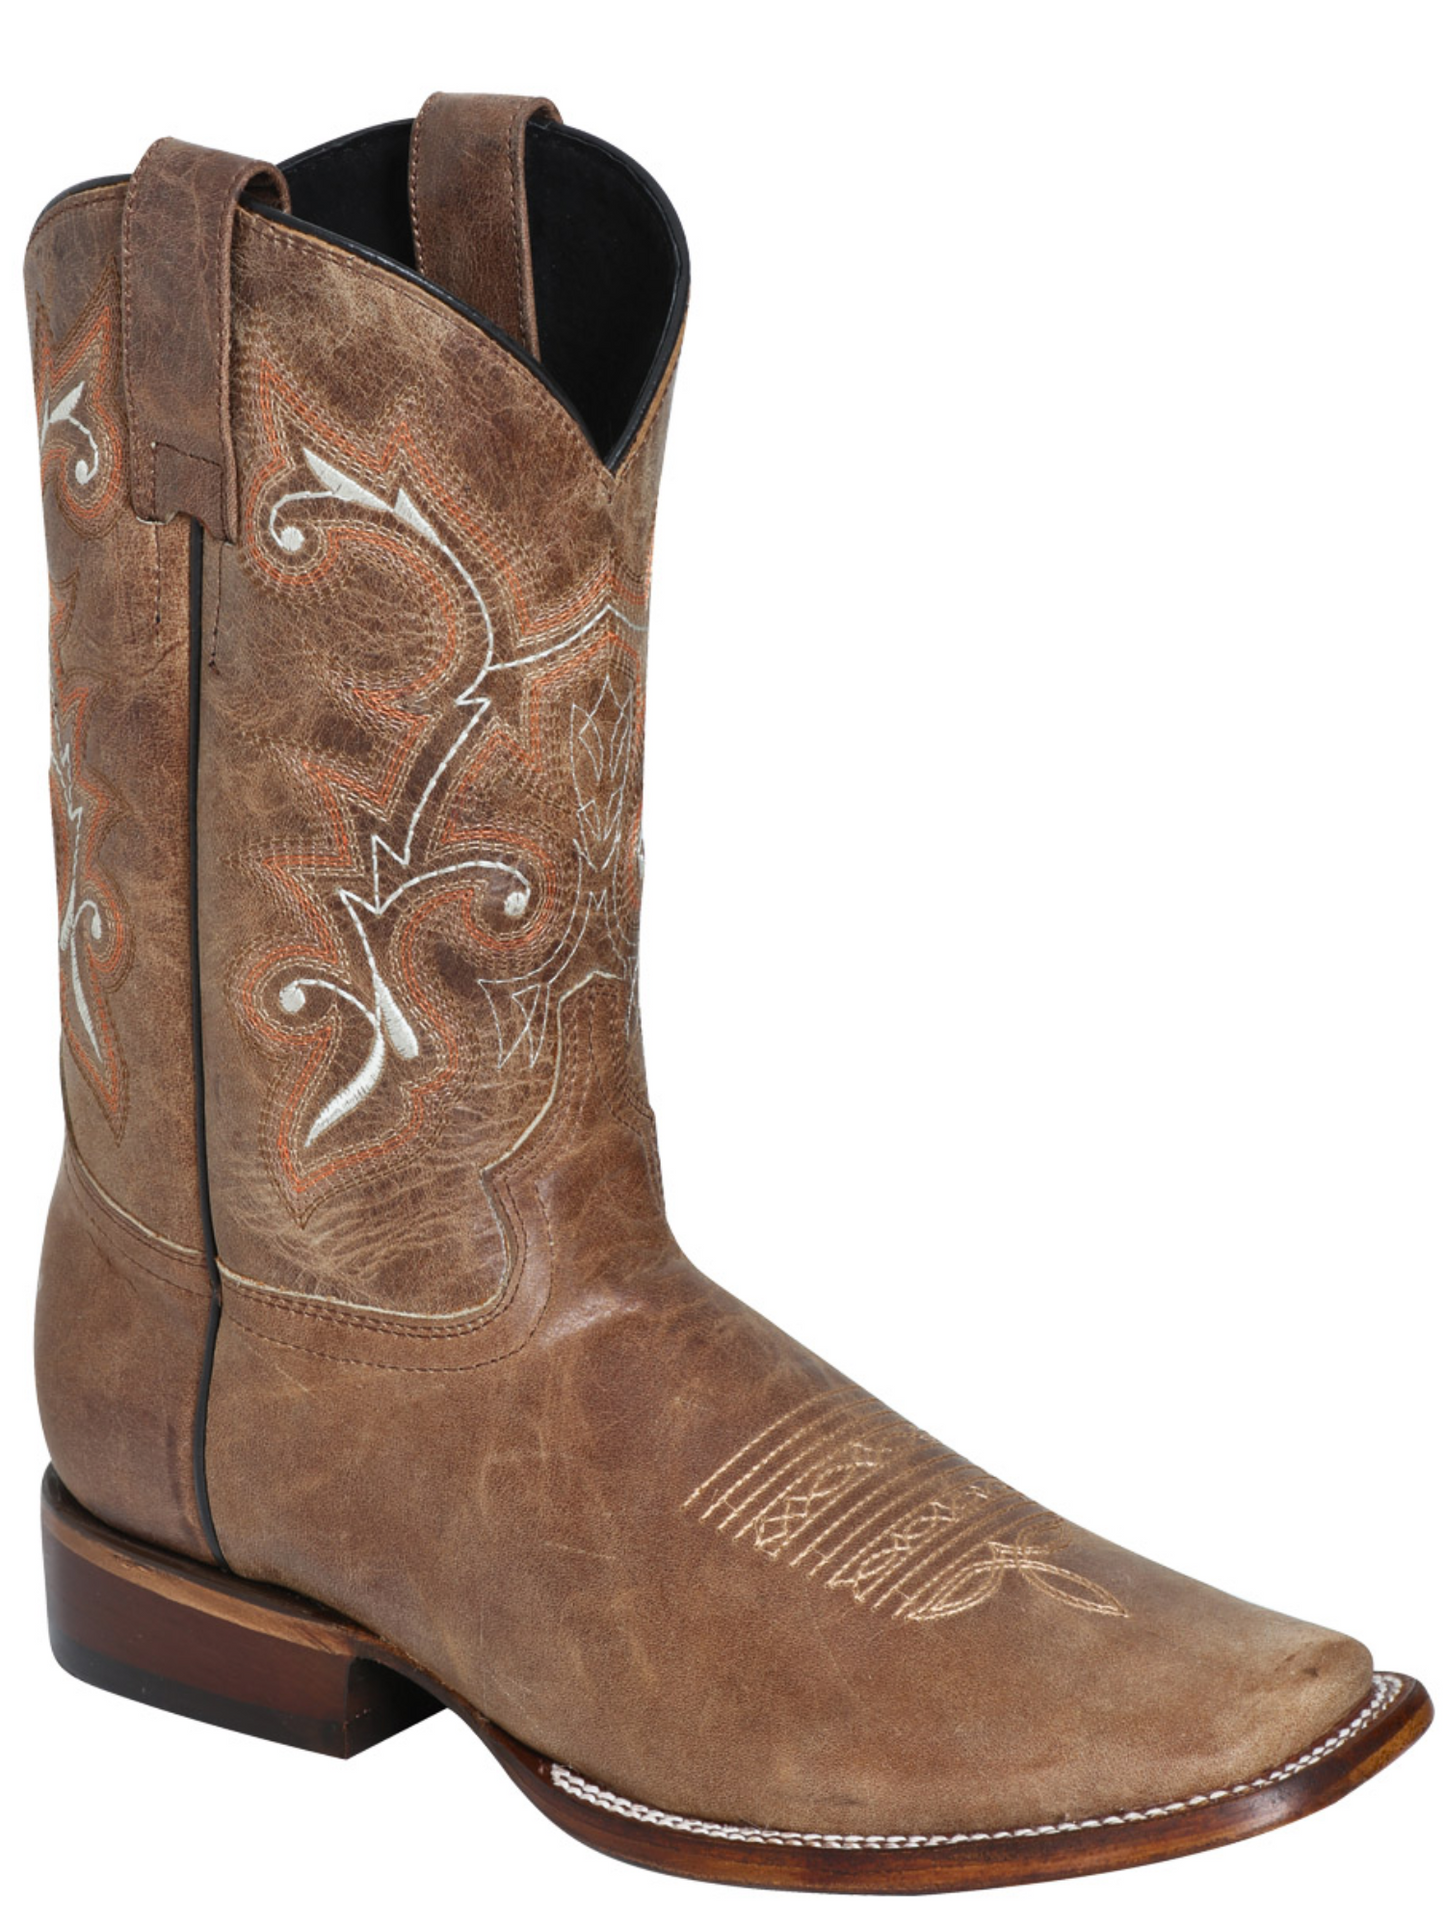 Classic Genuine Leather Rodeo Cowboy Boots for Men 'El Señor de los Cielos' - ID: 124068 Cowboy Boots El Señor de los Cielos